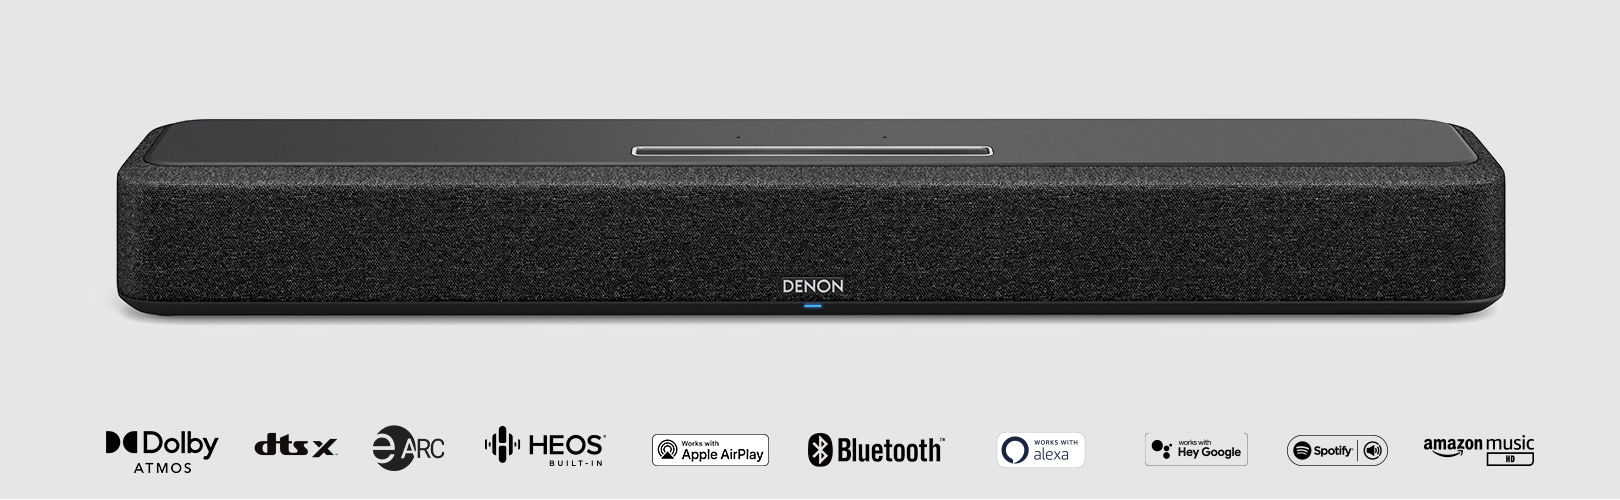 Denon - Sound Bar with 3D Audio, Dolby Atmos & DTS:X, Built-in HEOS & Alexa - Black Sound Bars -